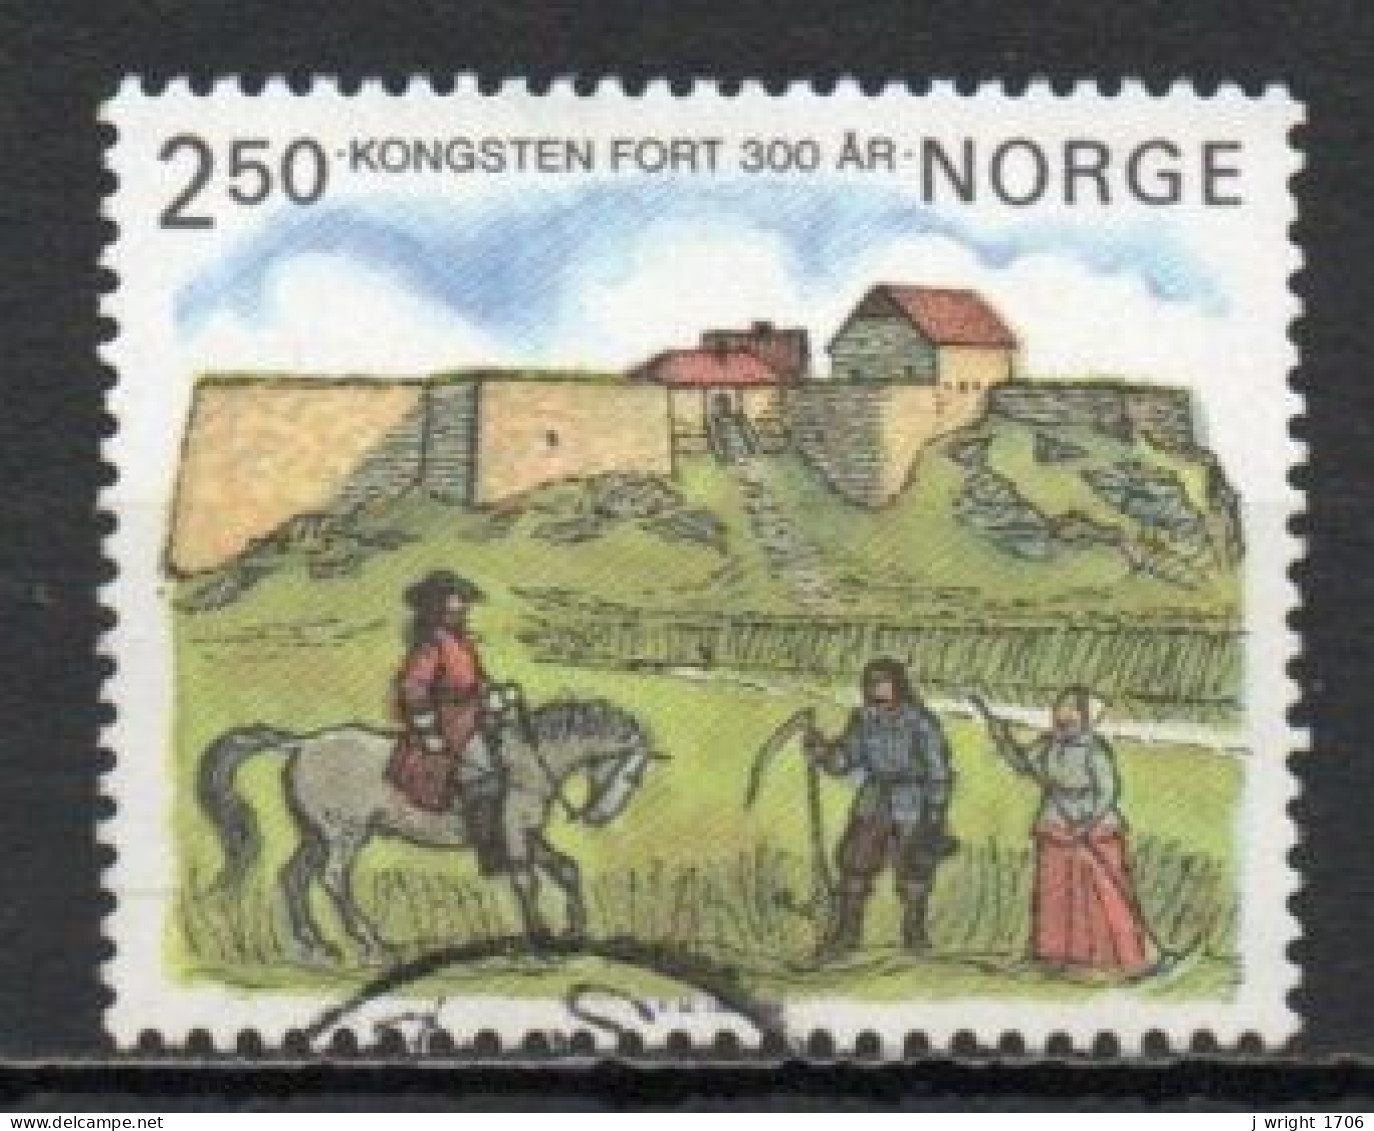 Norway, 1985, Kongsten Fort 300th Anniv, Set, USED - Gebruikt